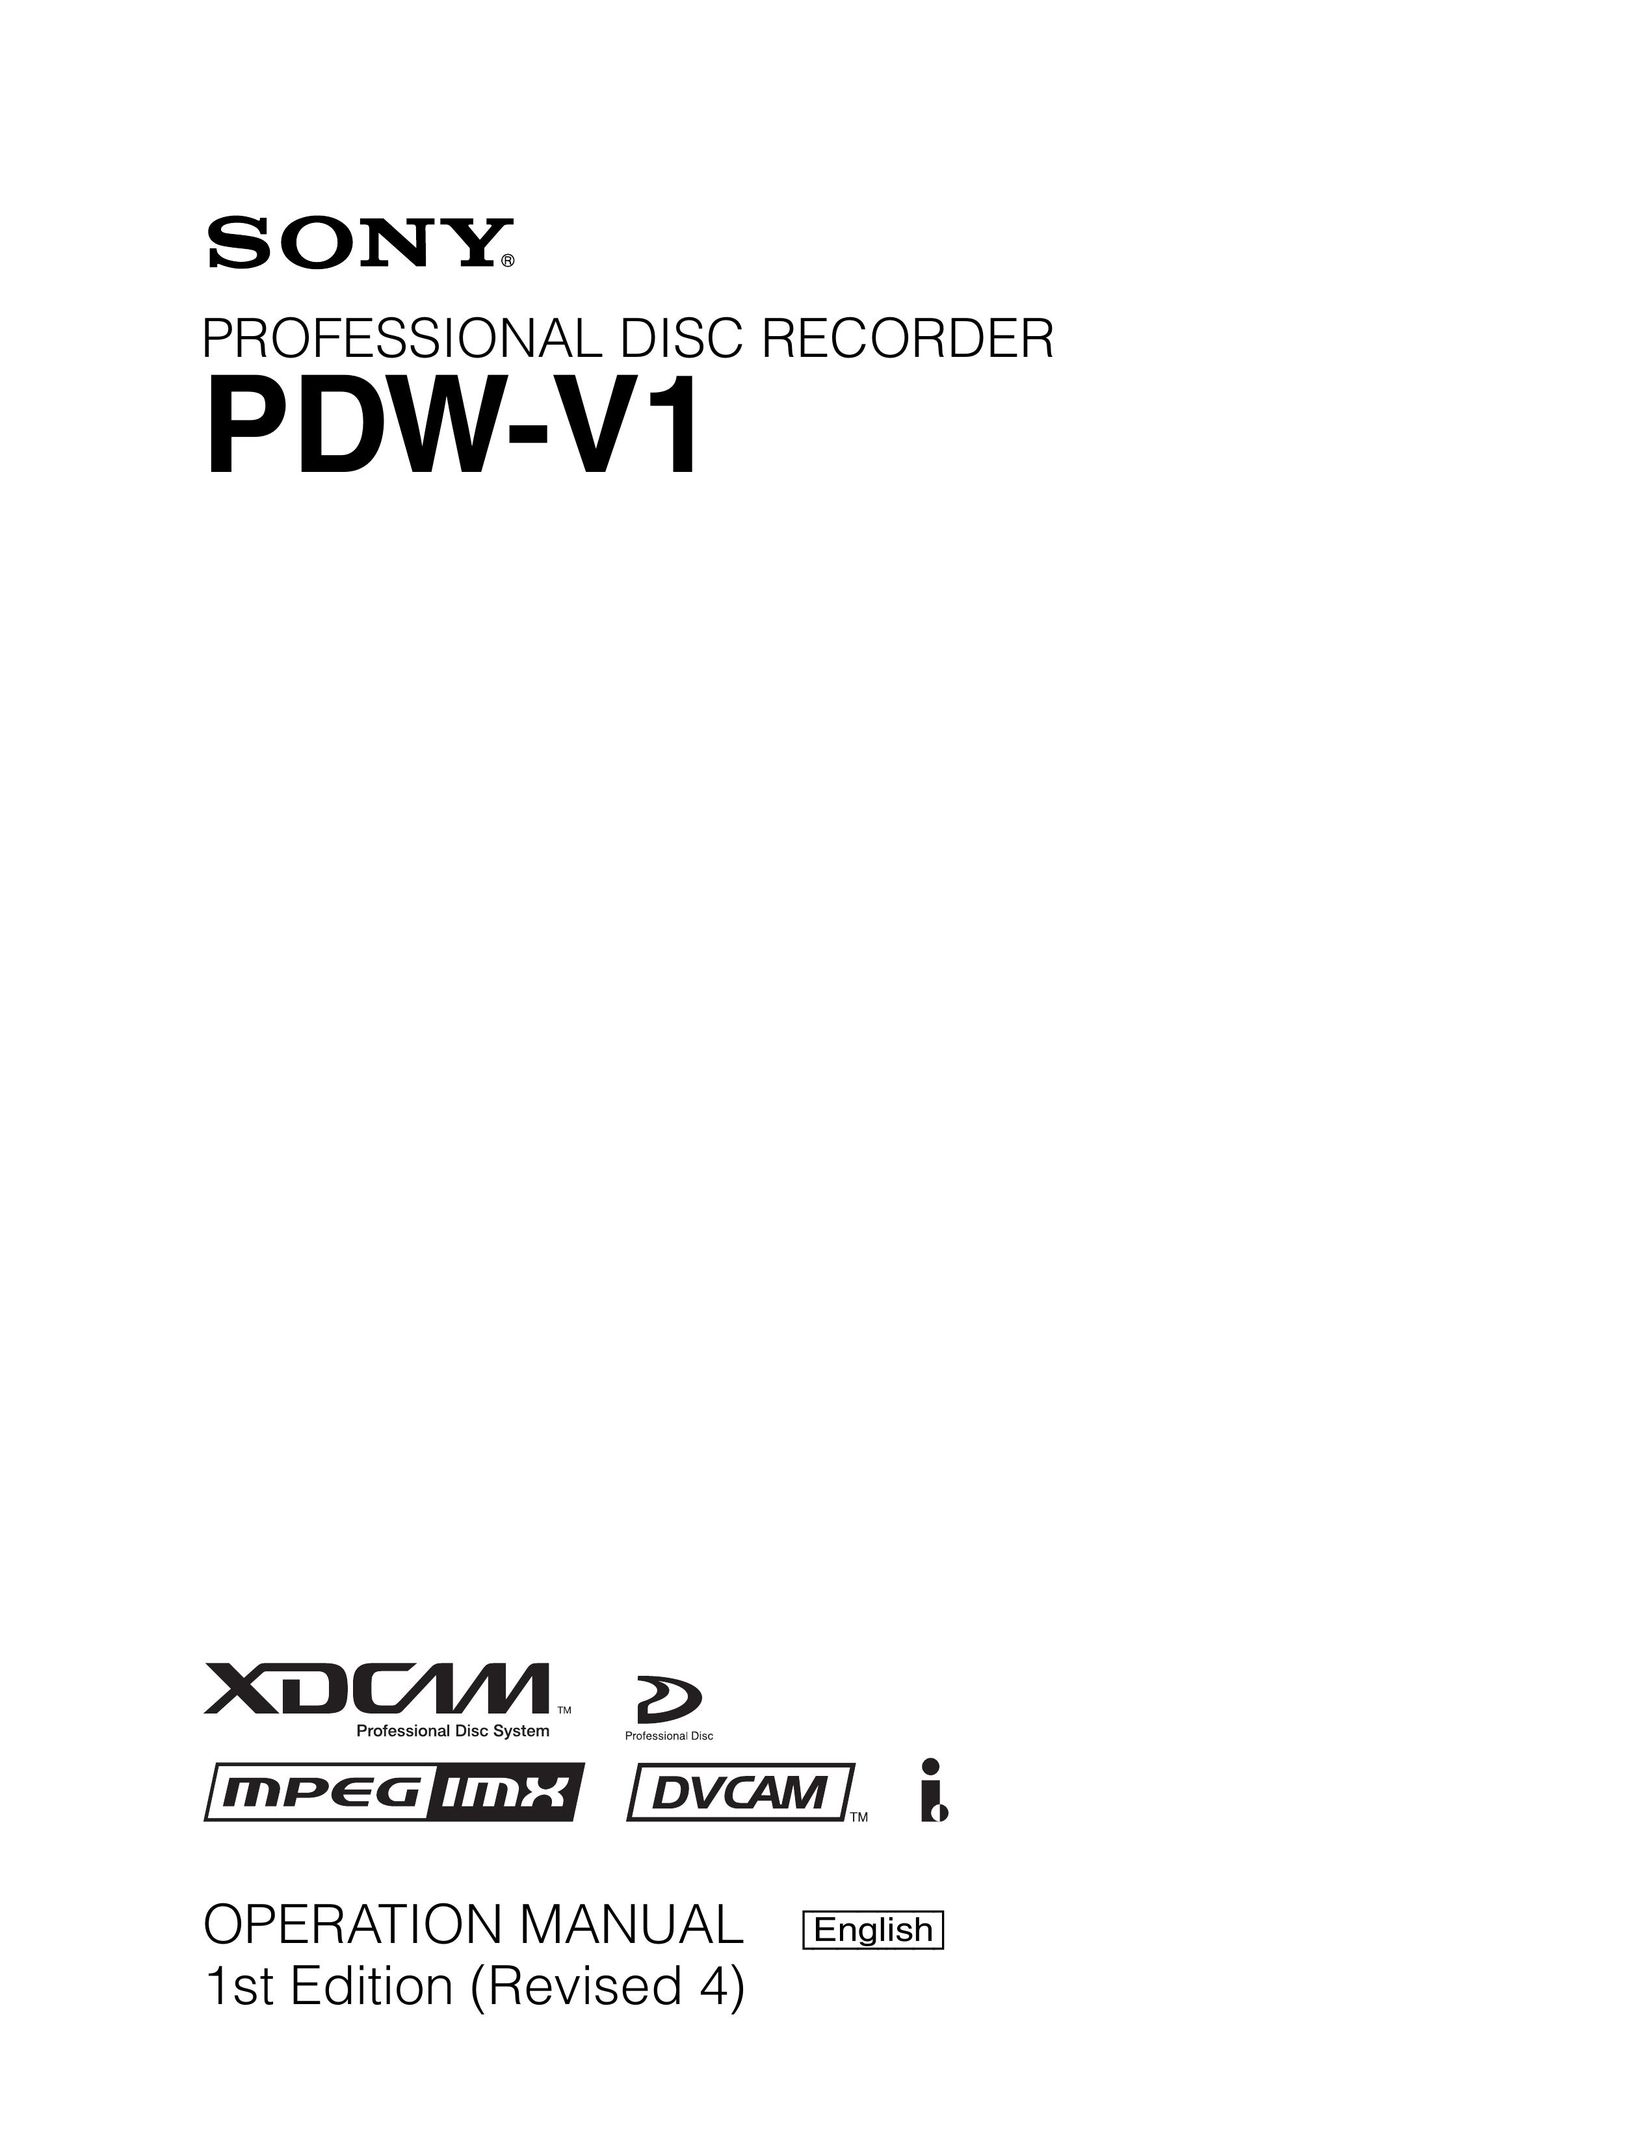 Sony PDW-V1 DVD Recorder User Manual